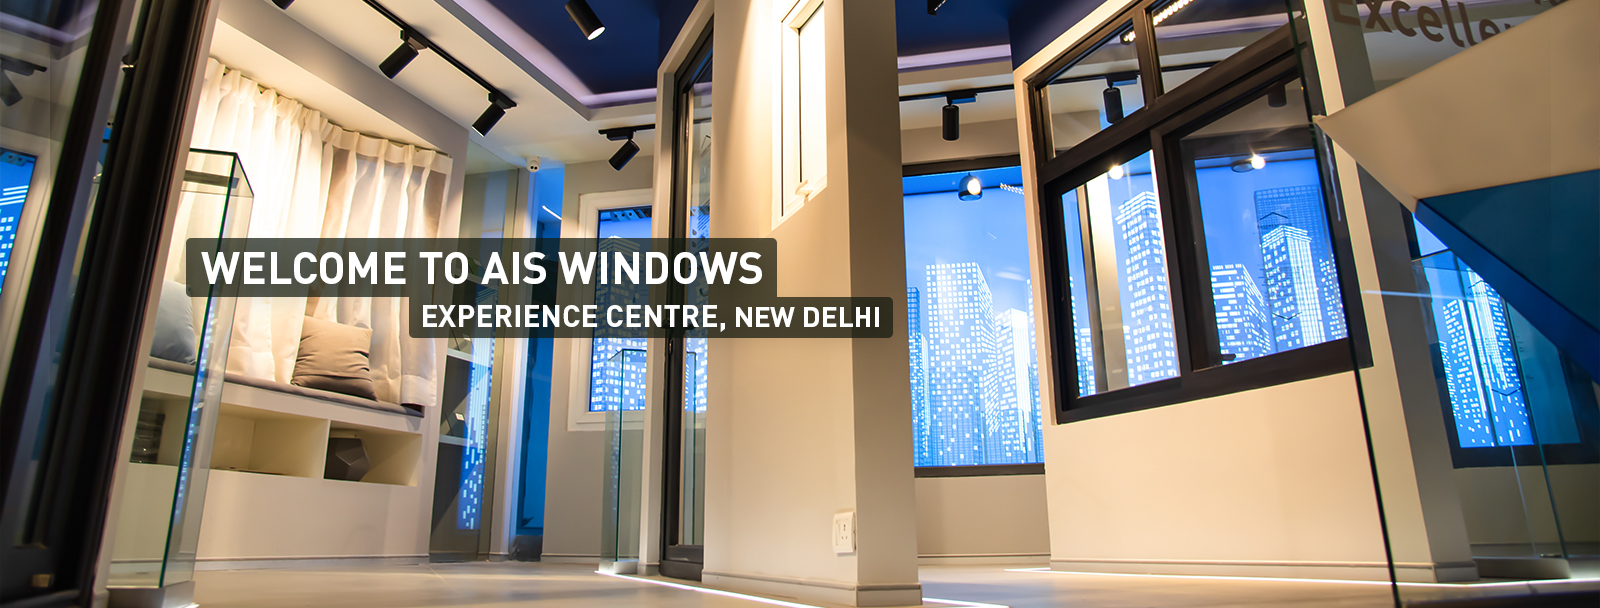 AIS Windows Experience Centre New Delhi Banner 2